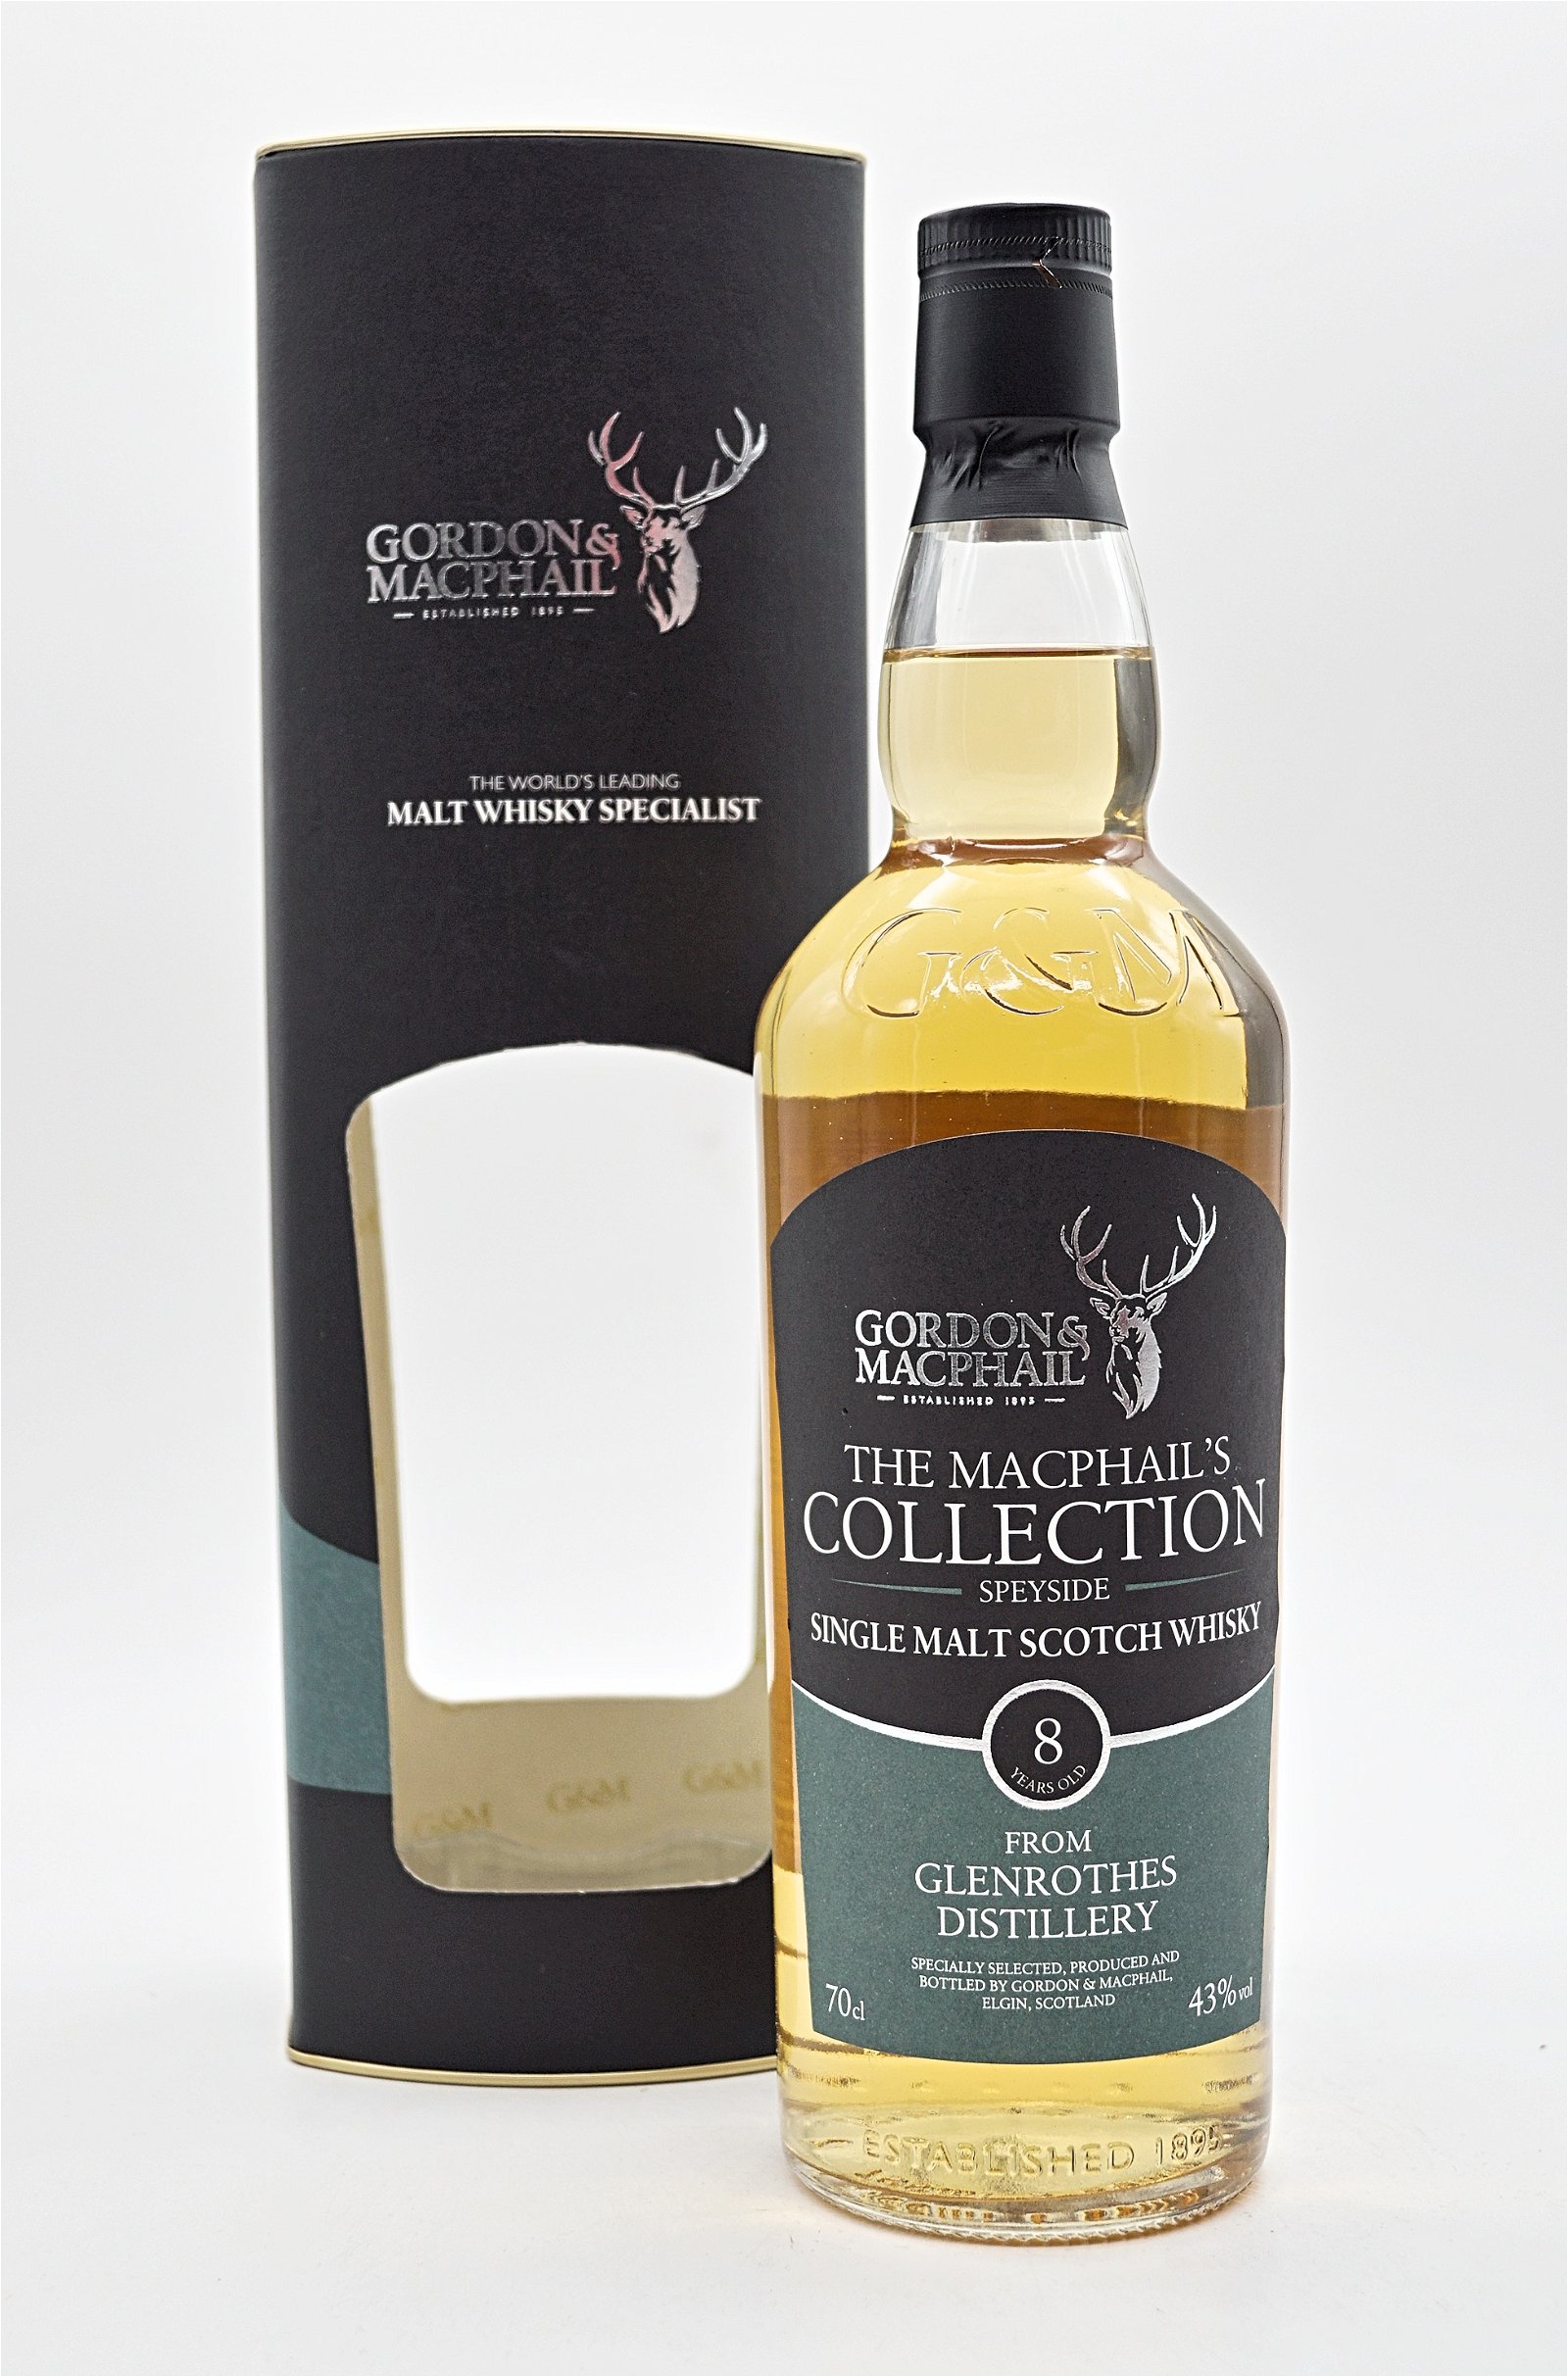 Gordon & Macphail The Macphails Collection Glenrothes Distillery 8 Jahre Single Malt Scotch Whisky